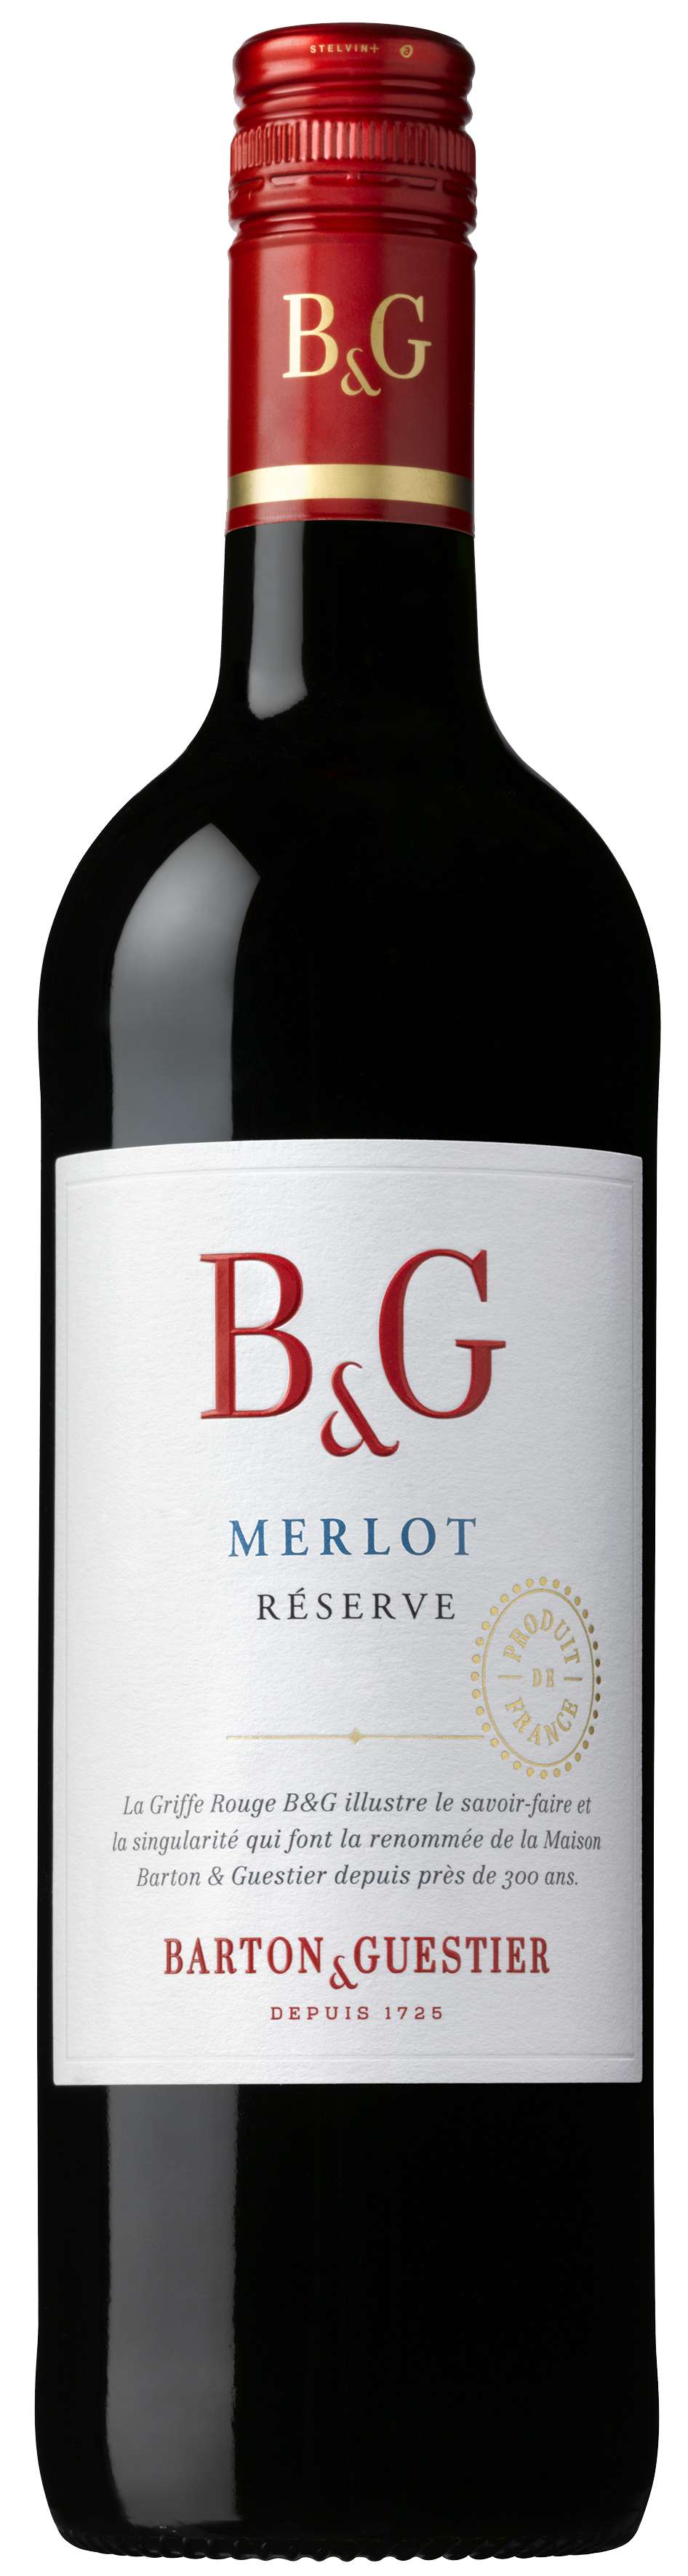 Barton & Guestier Merlot Wines